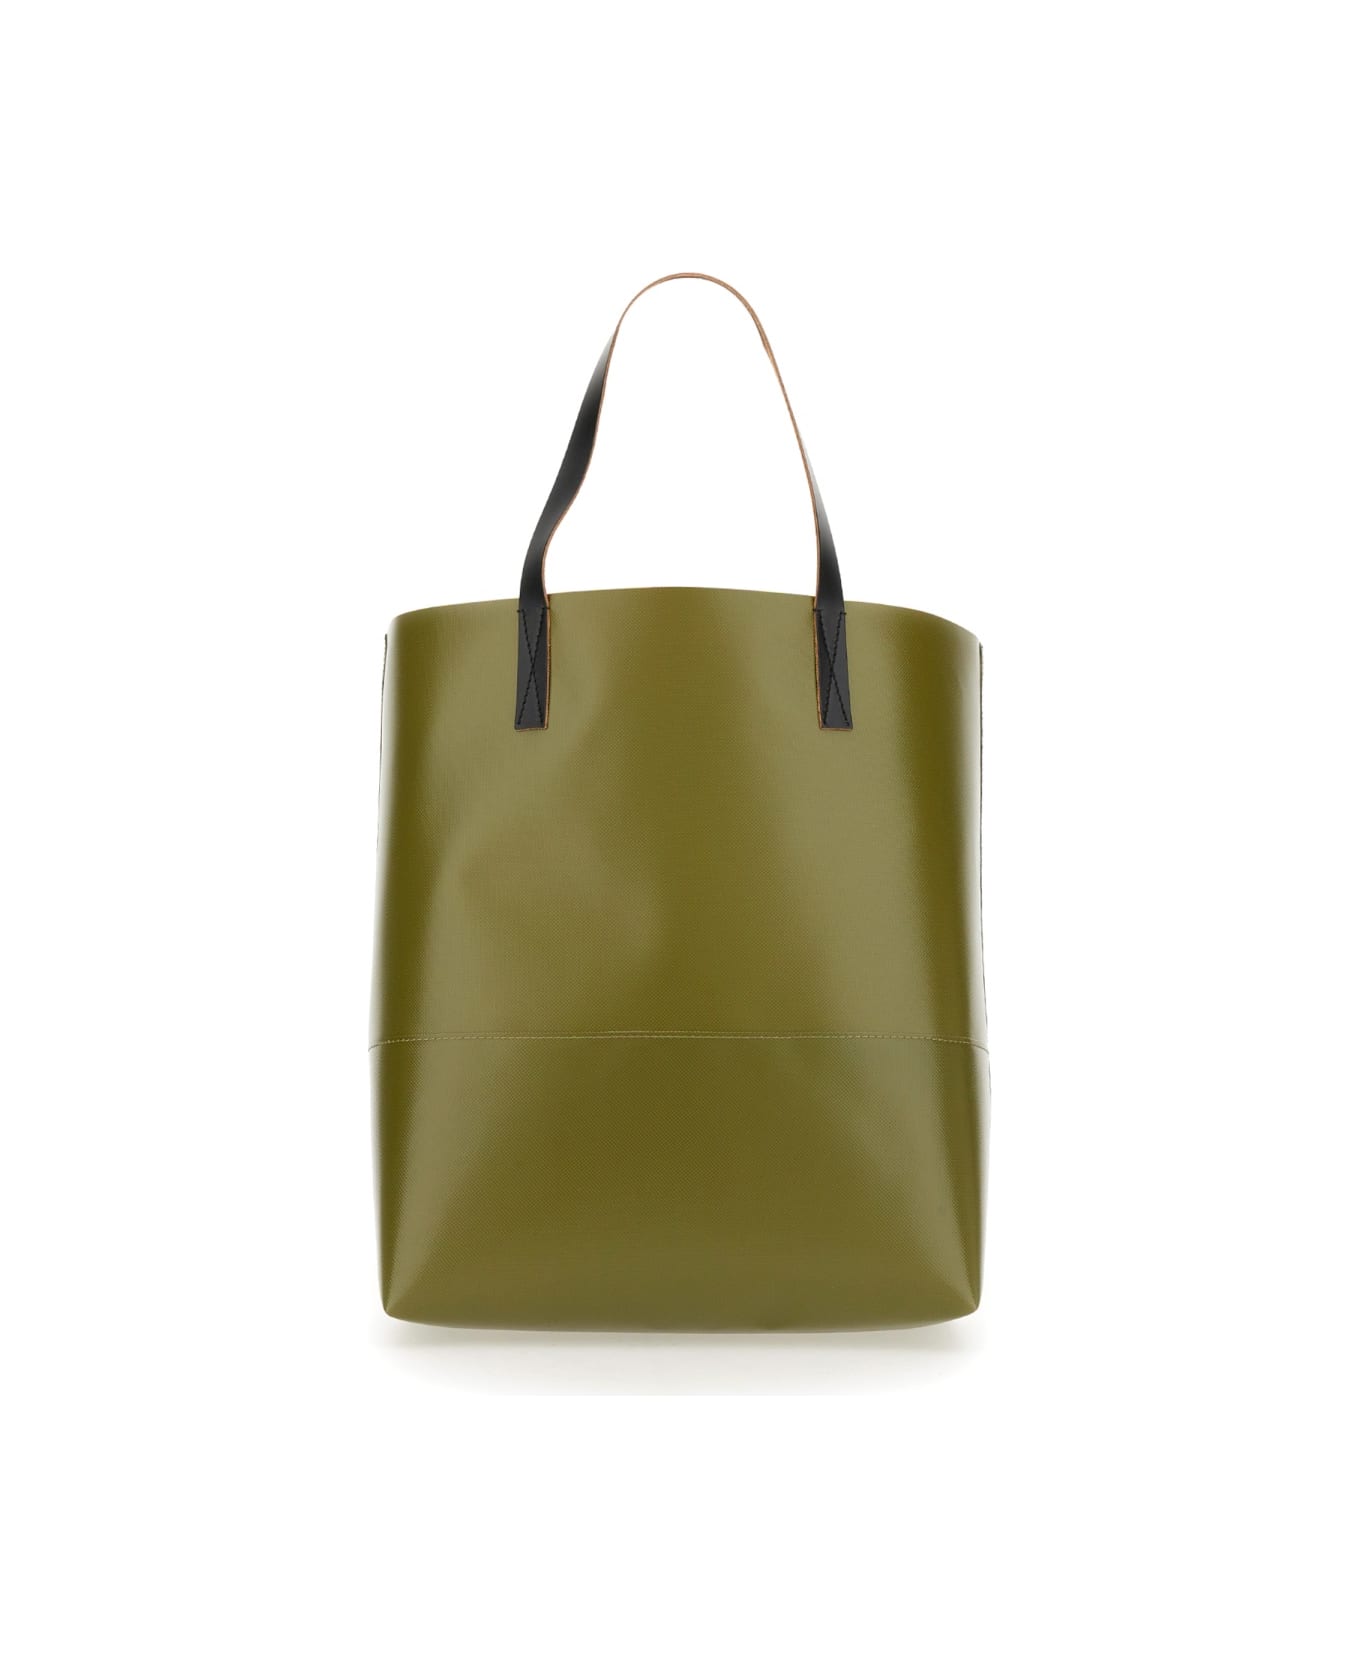 Marni Shopping Bag With Logo - GREEN トートバッグ